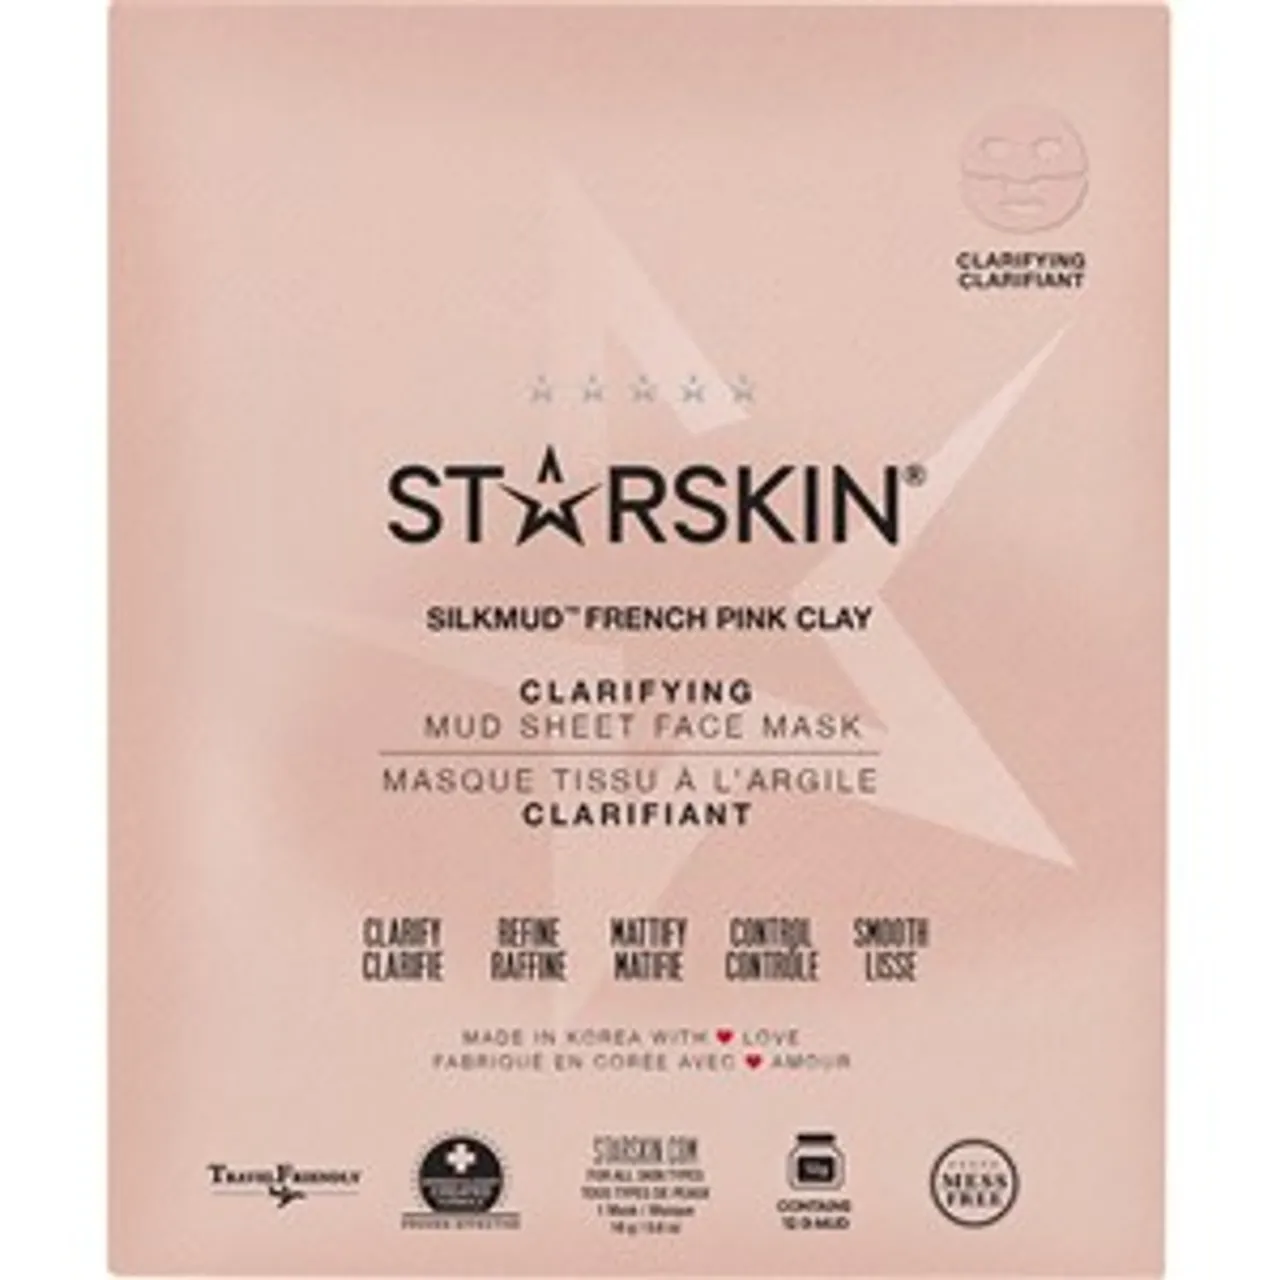 StarSkin Puifying Face Mask Bio-Cellulose 2 16 g